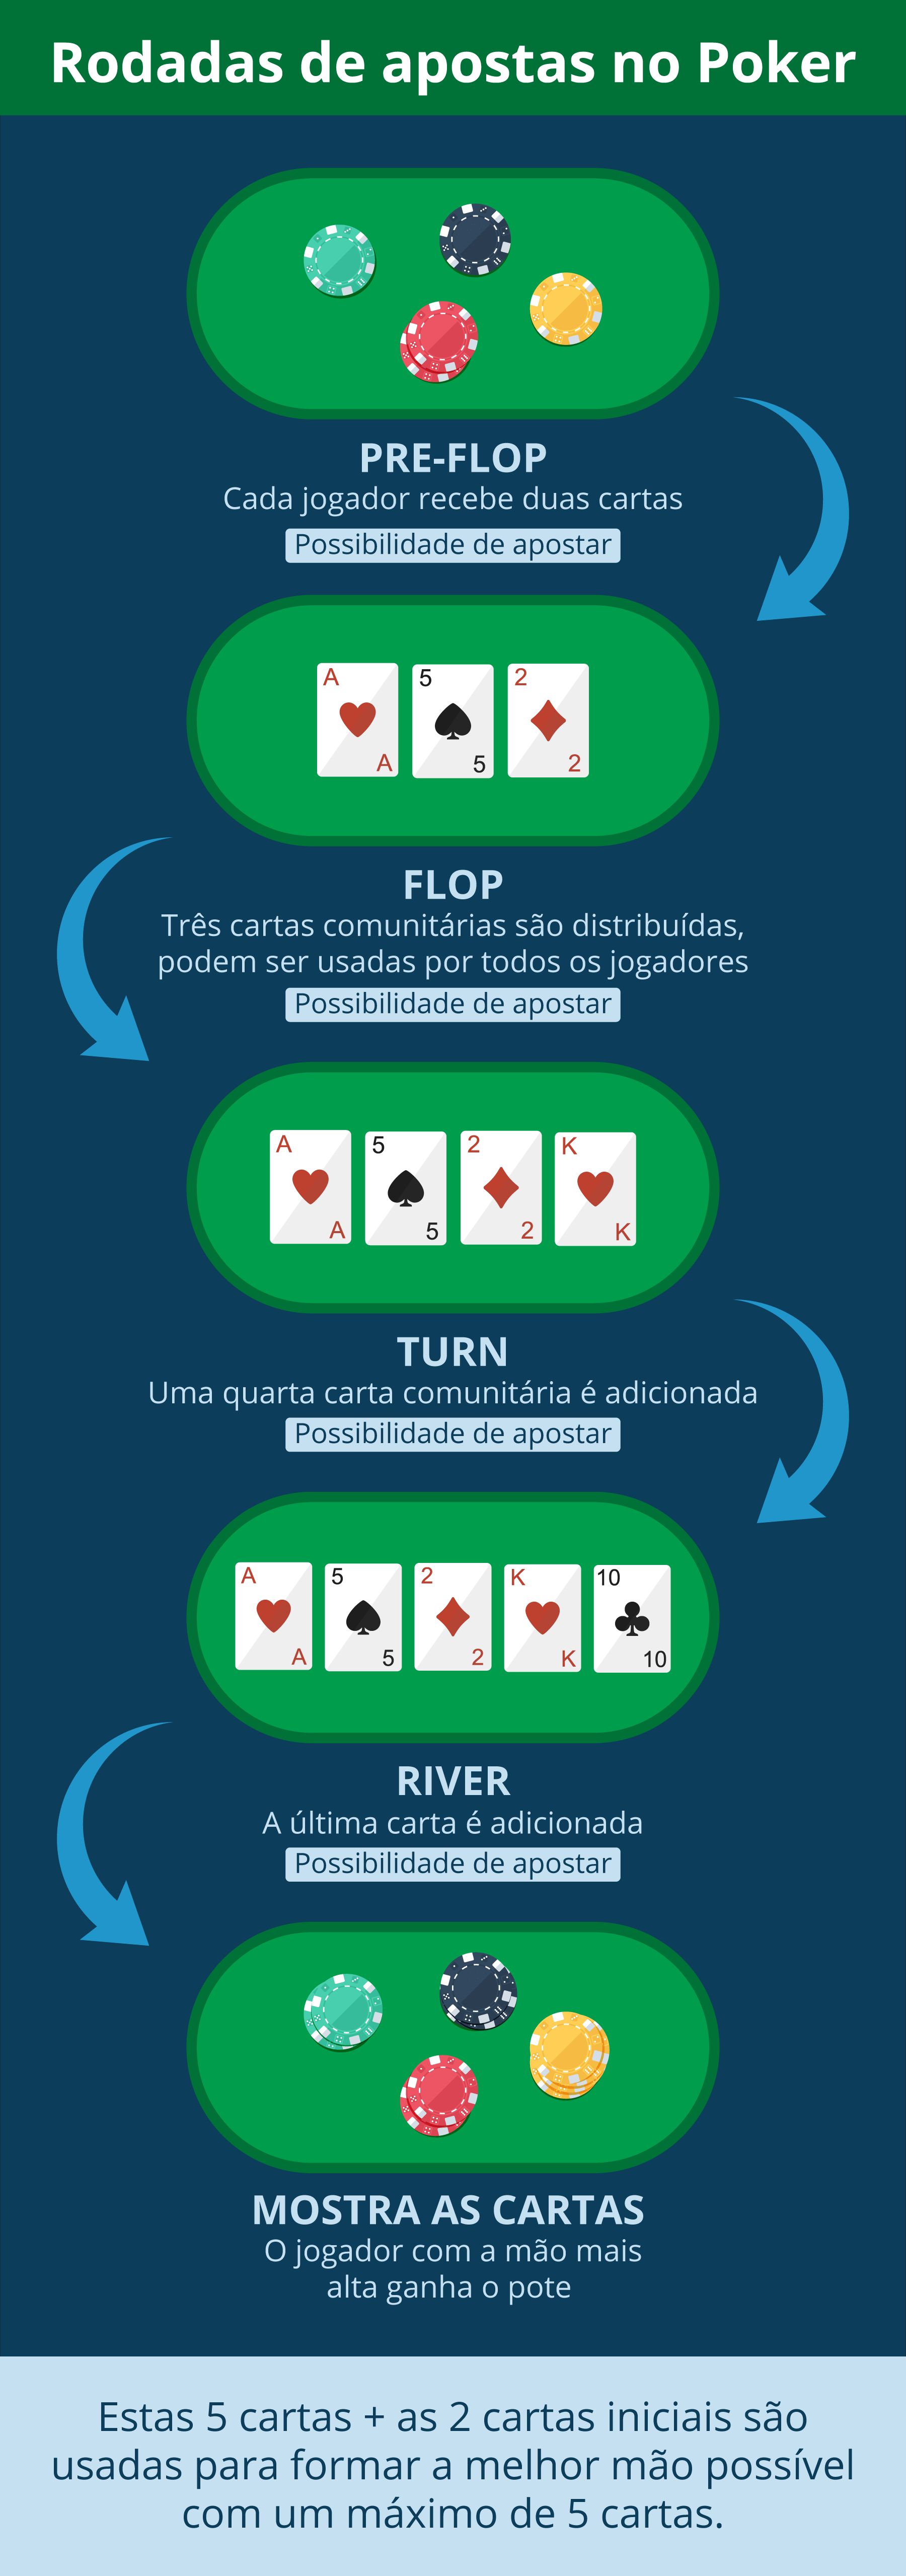 Rodadas-de-apostas-no-Poker: PortugalCasino